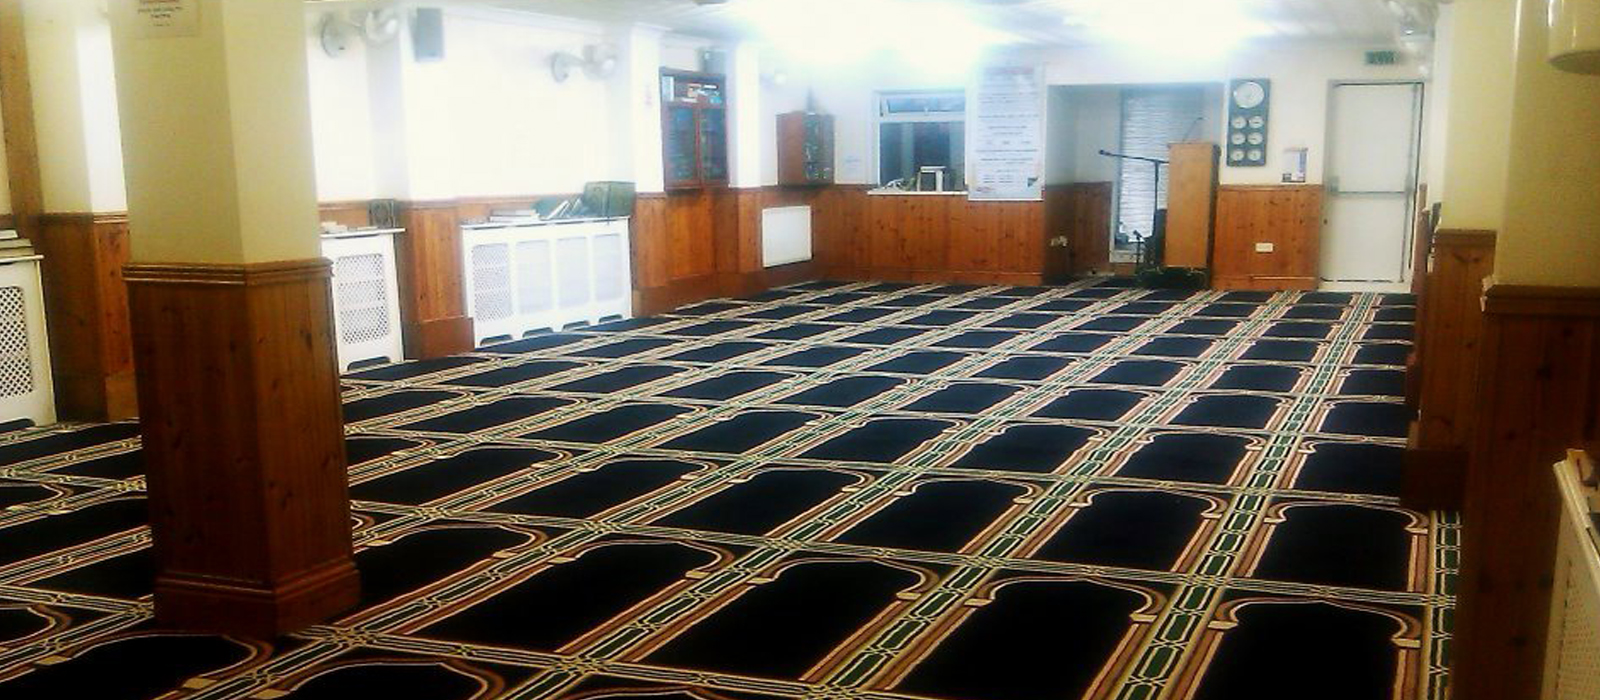 Wittion Islamic Centre in Aston, Birmingham